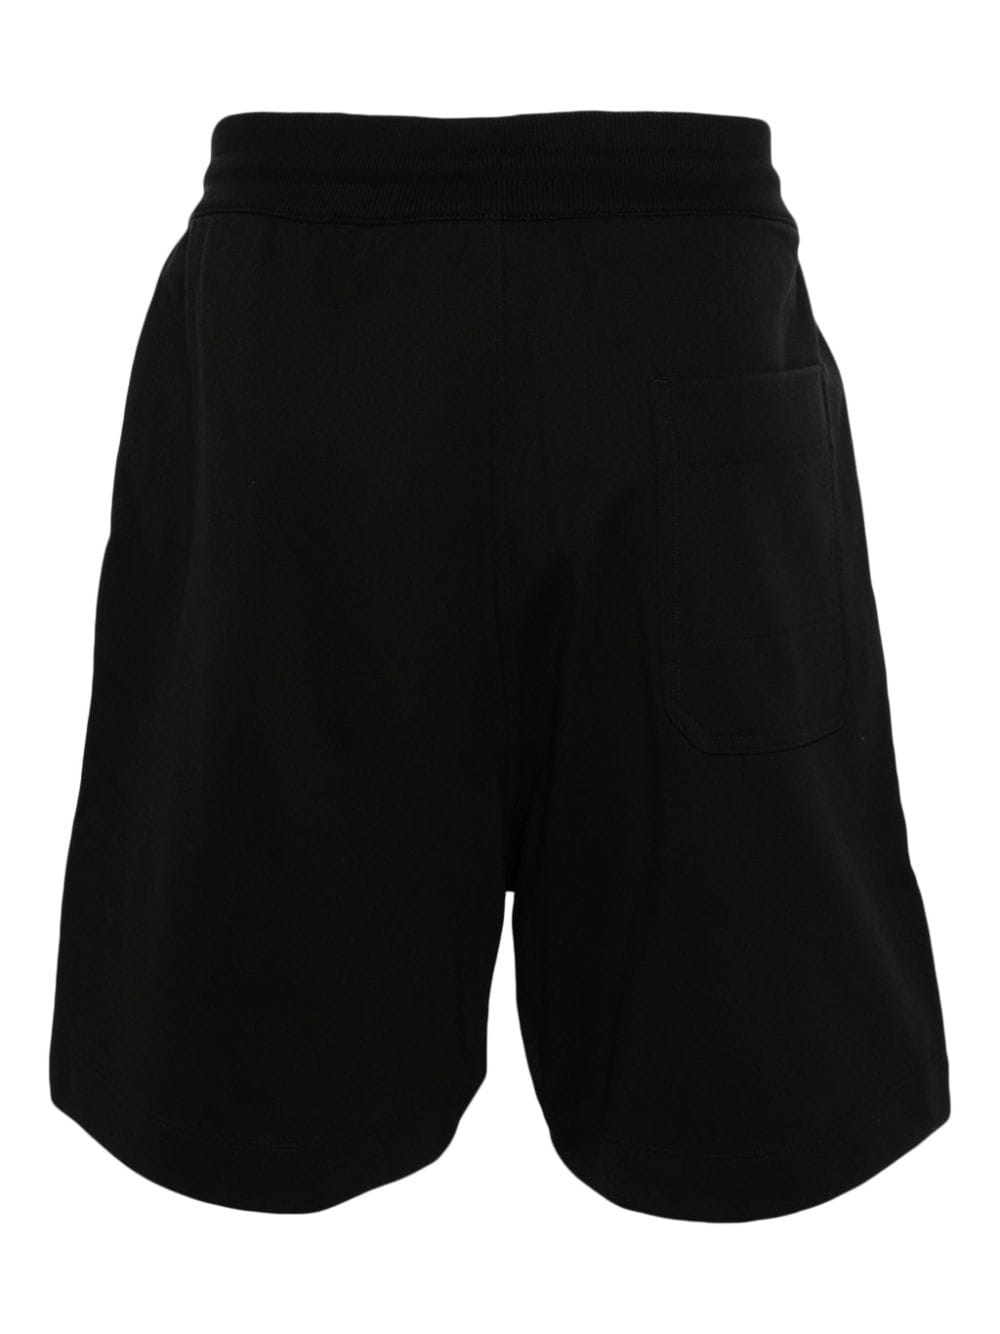 black shorts with drawstring